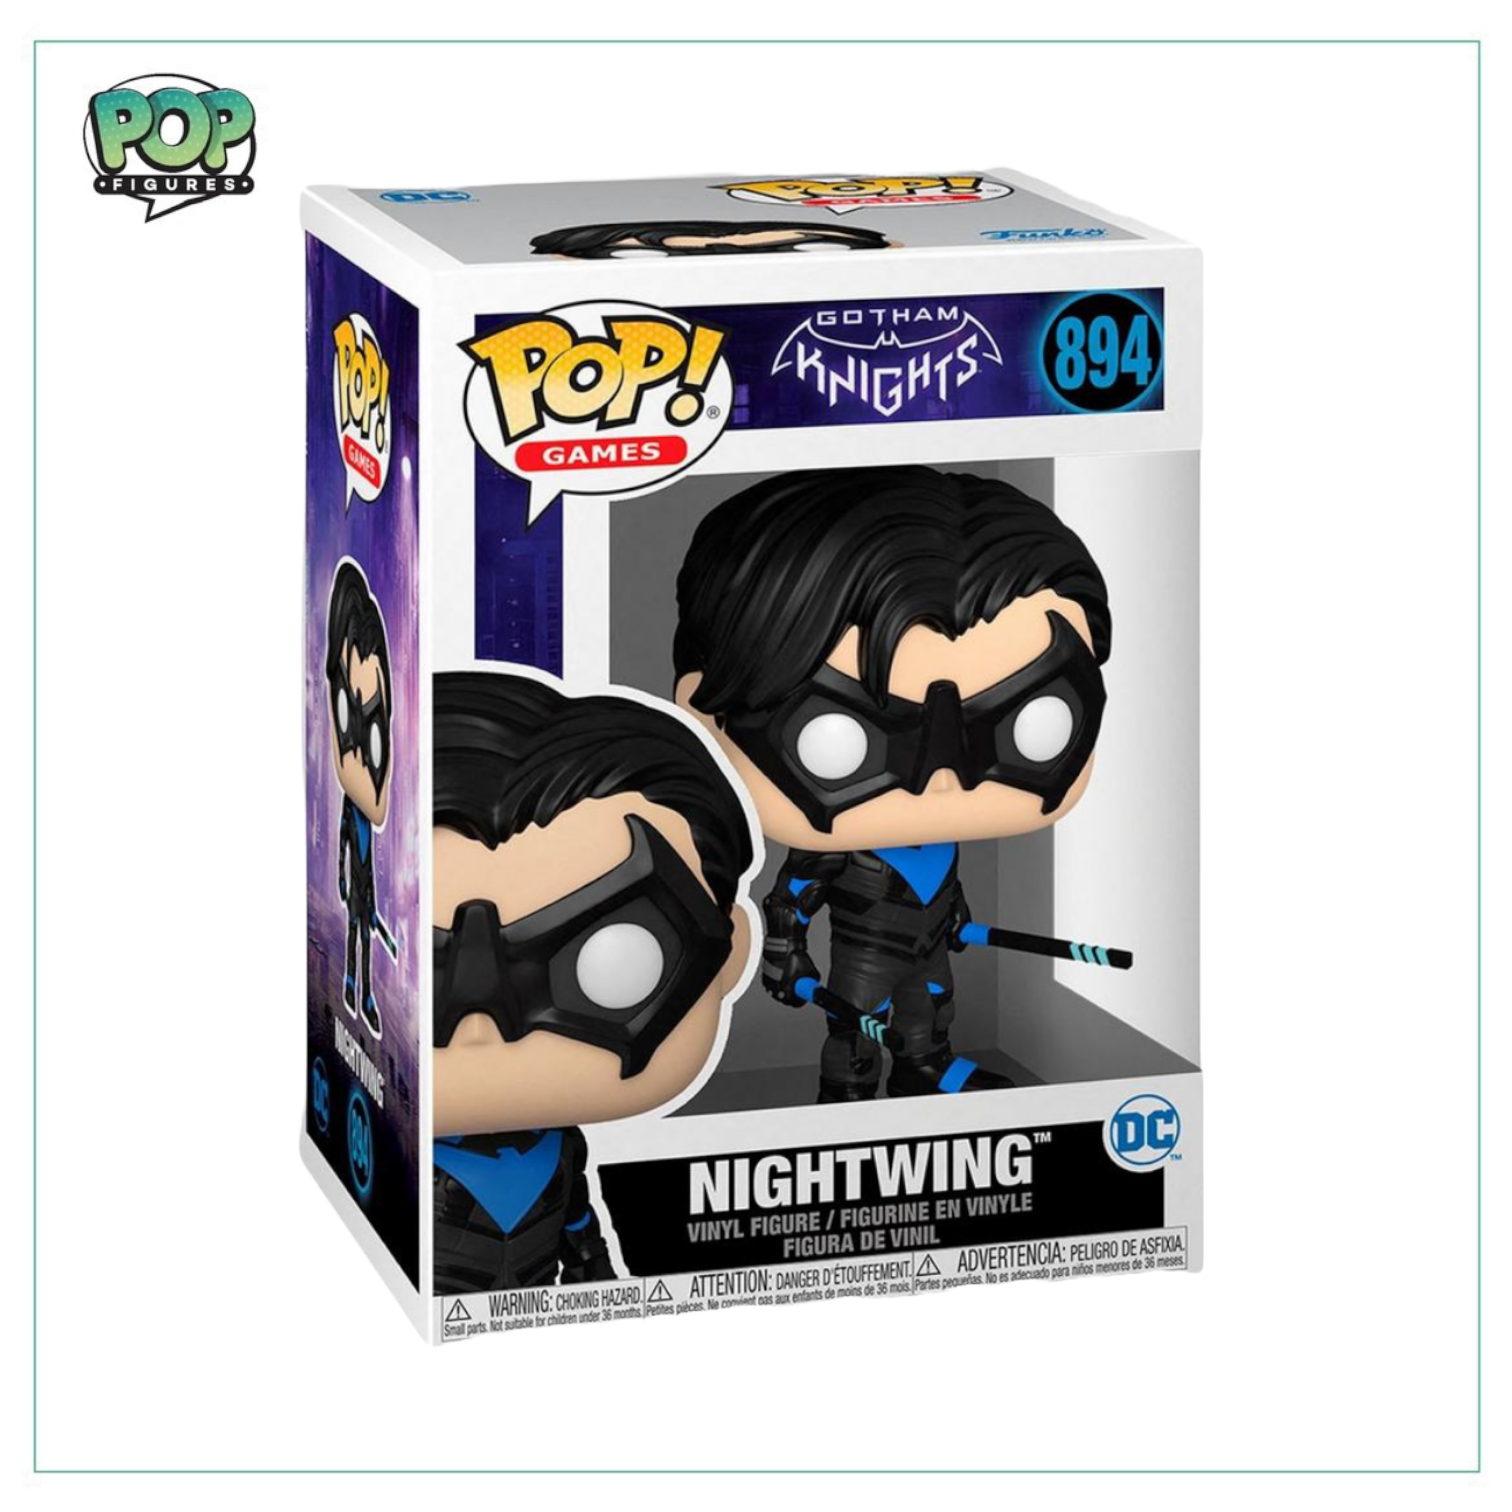 Nightwing #894 Funko Pop! Gotham Knights